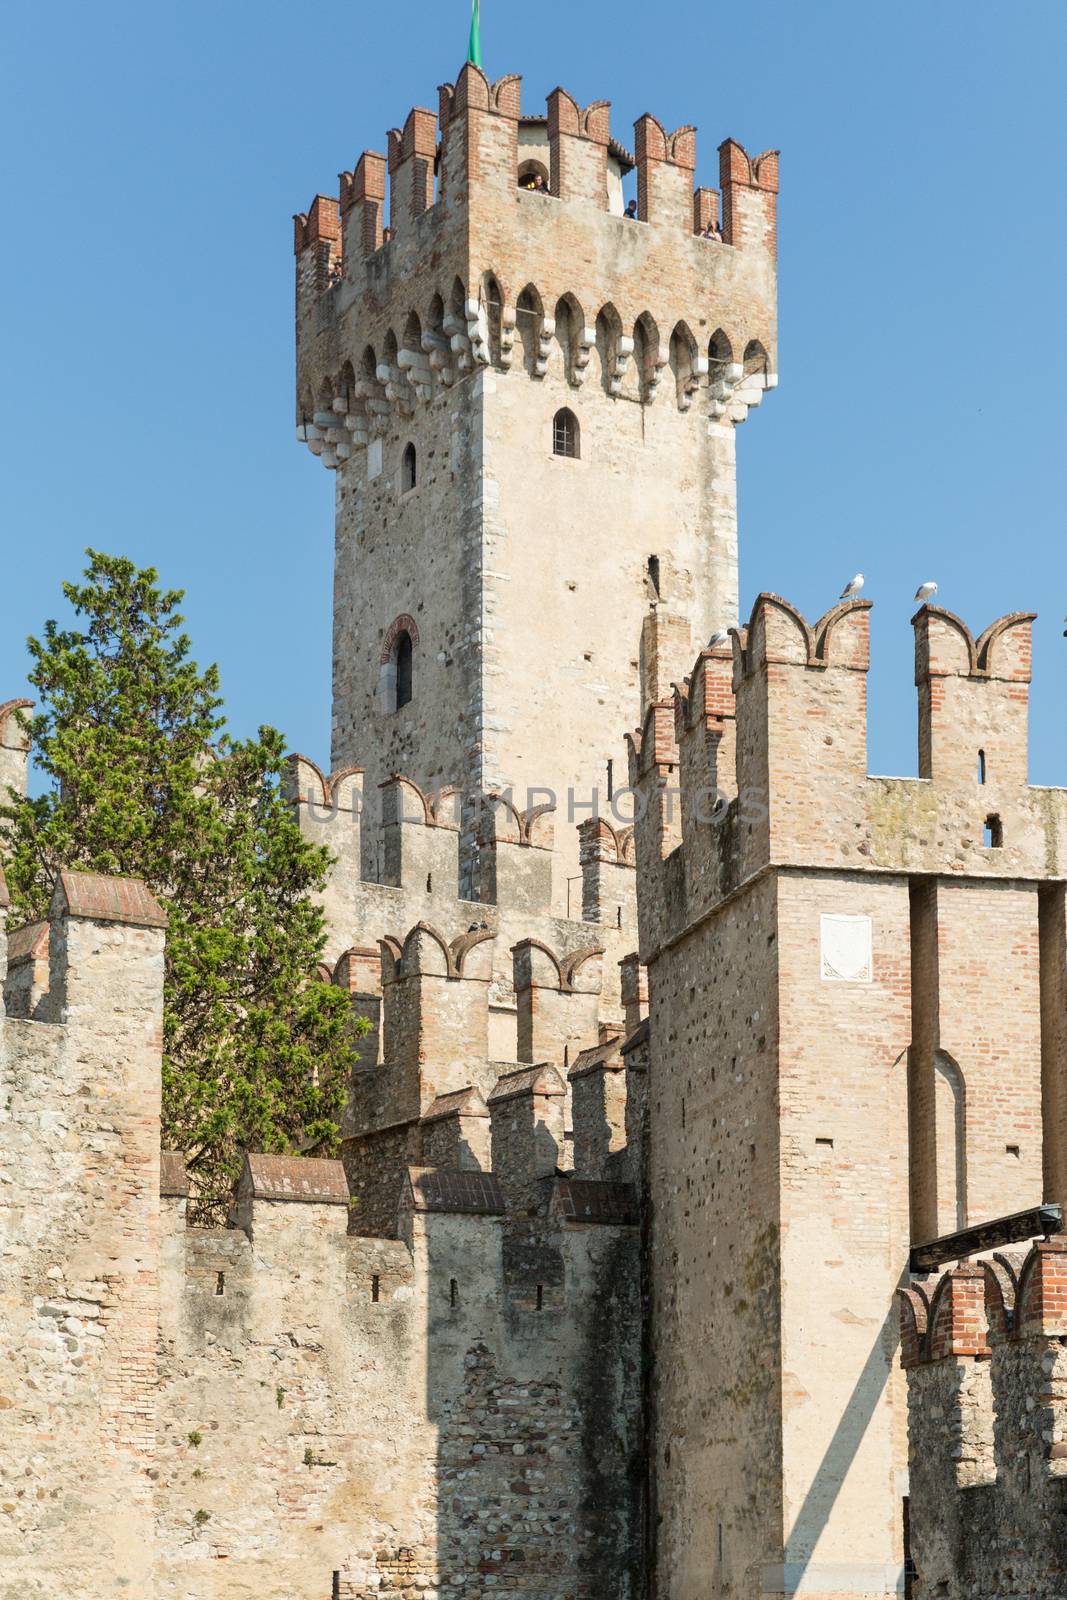 Castello Scaligero in Sirmione on Lake Garda by chrisukphoto